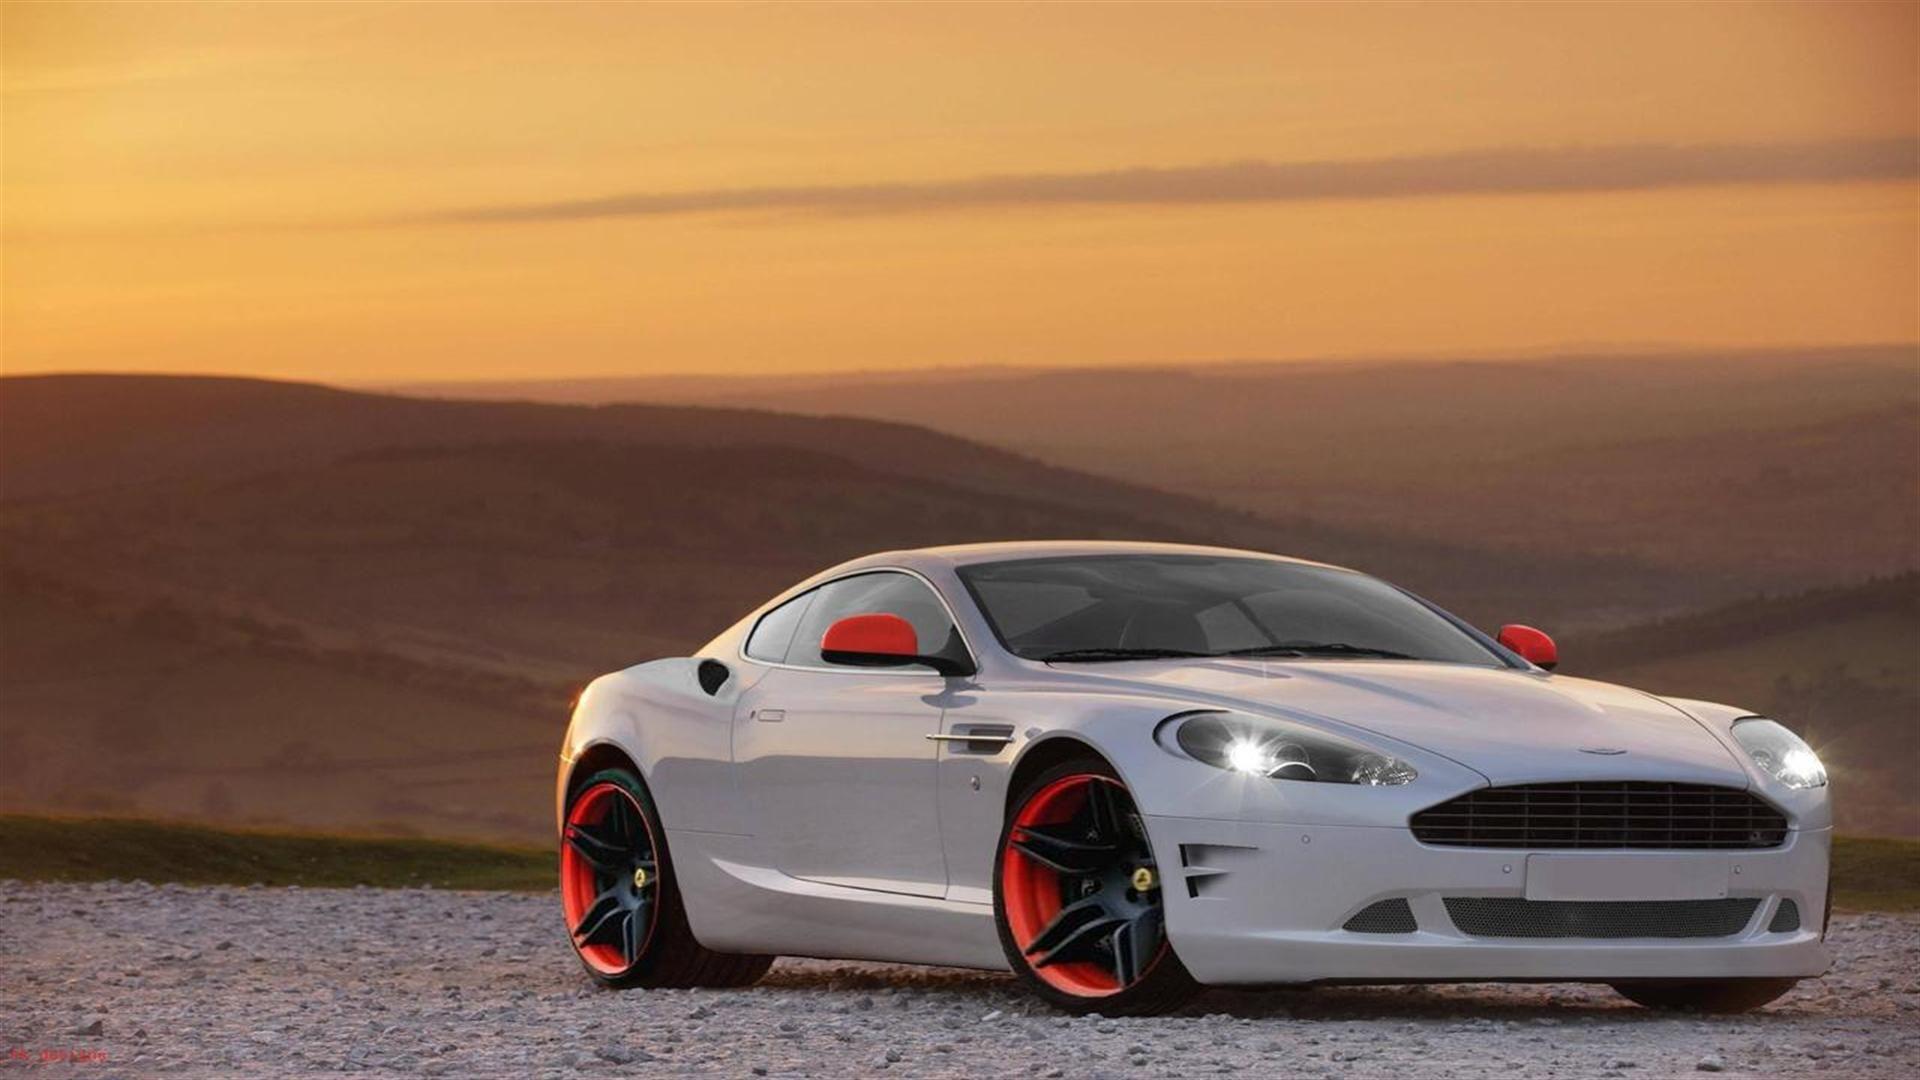 Widescreen Aston Martin HD P Charlie On Cars Wallpaper 1080p Ferrari